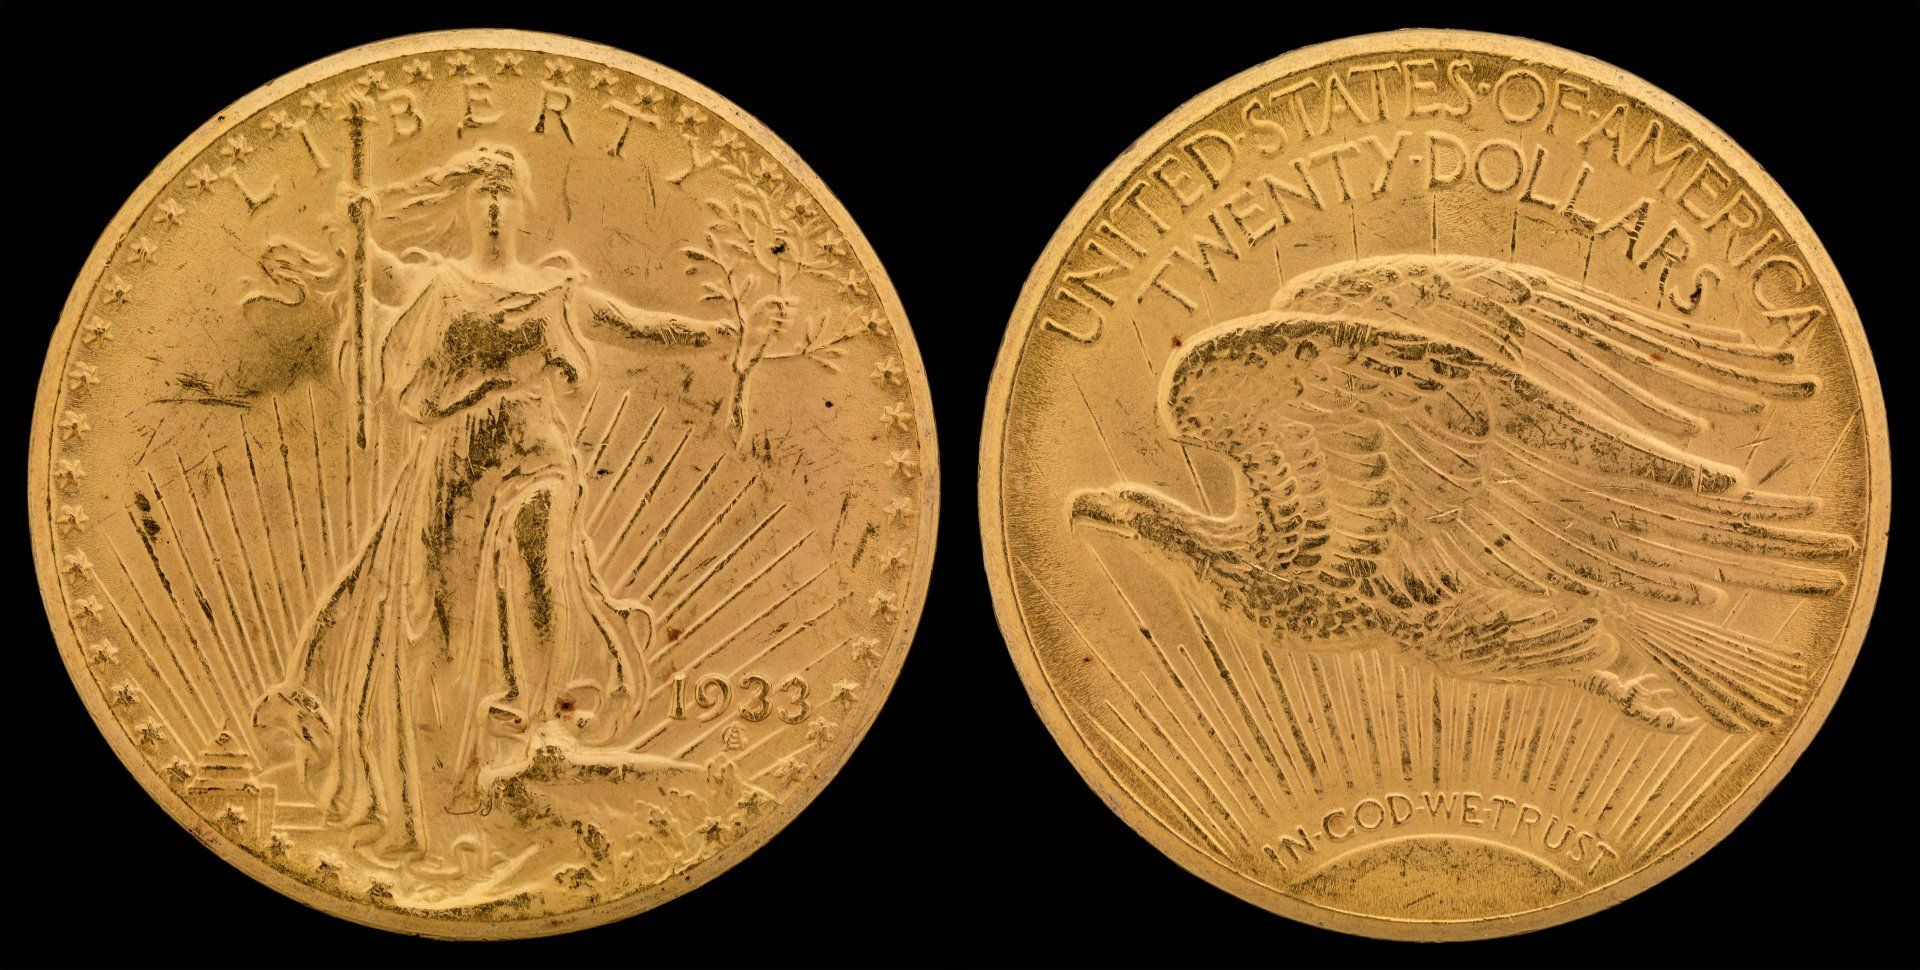 1933 double eagle gold coin